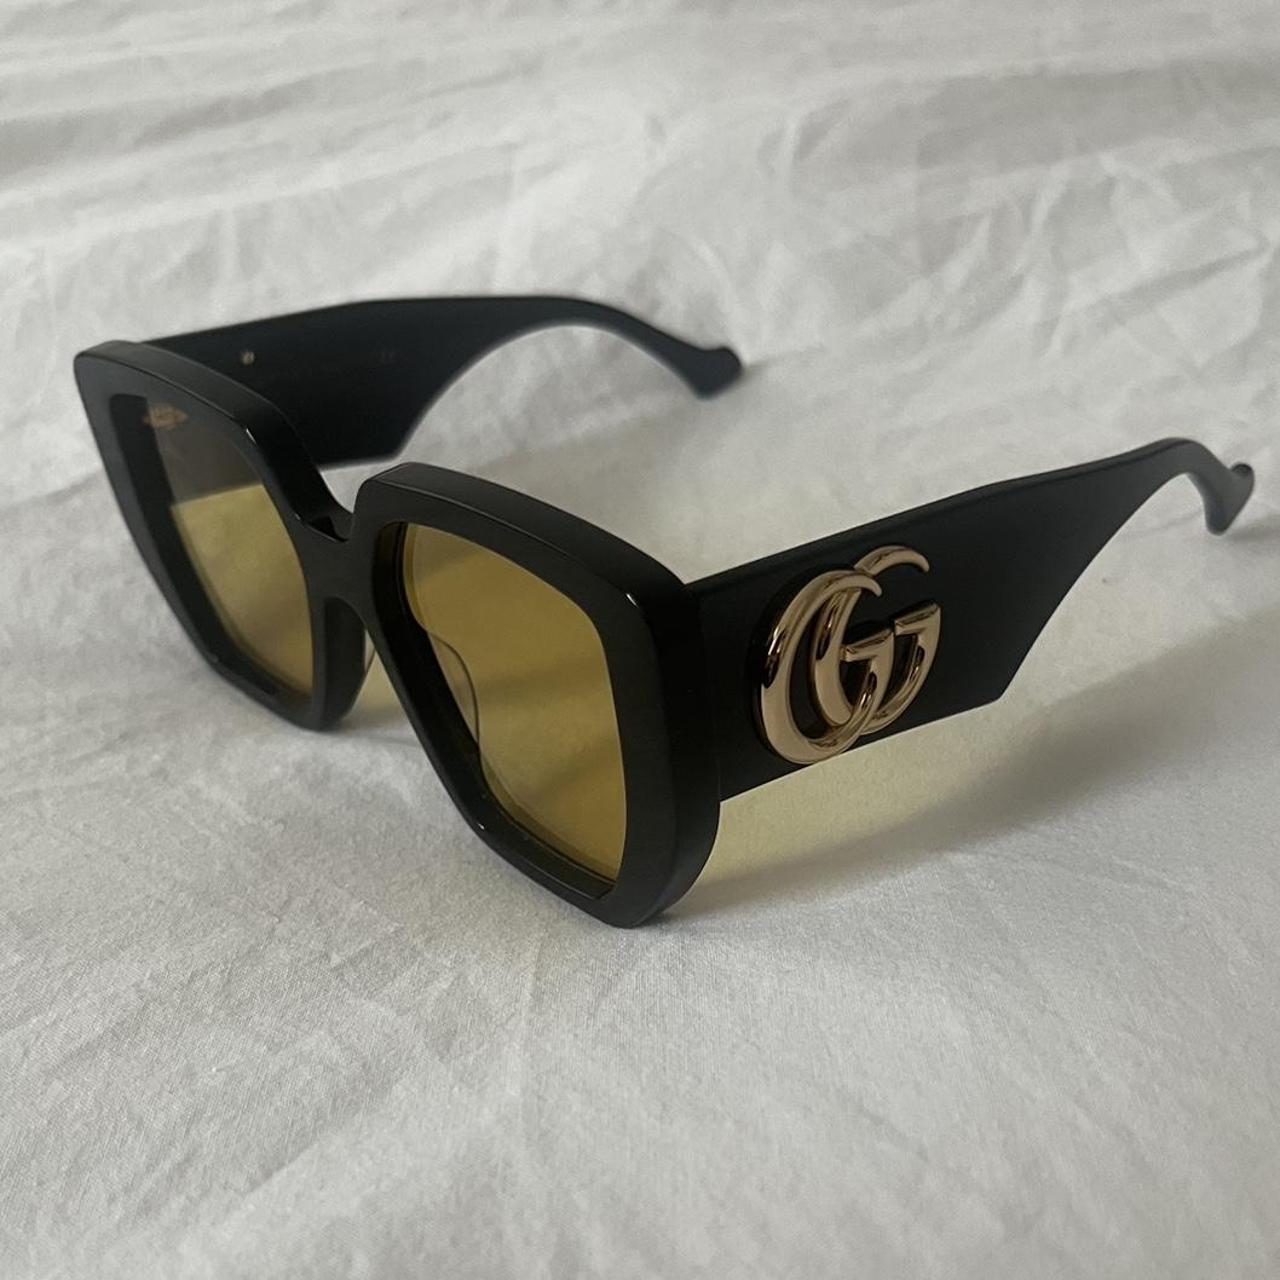 Gucci Women's Black and Yellow Sunglasses